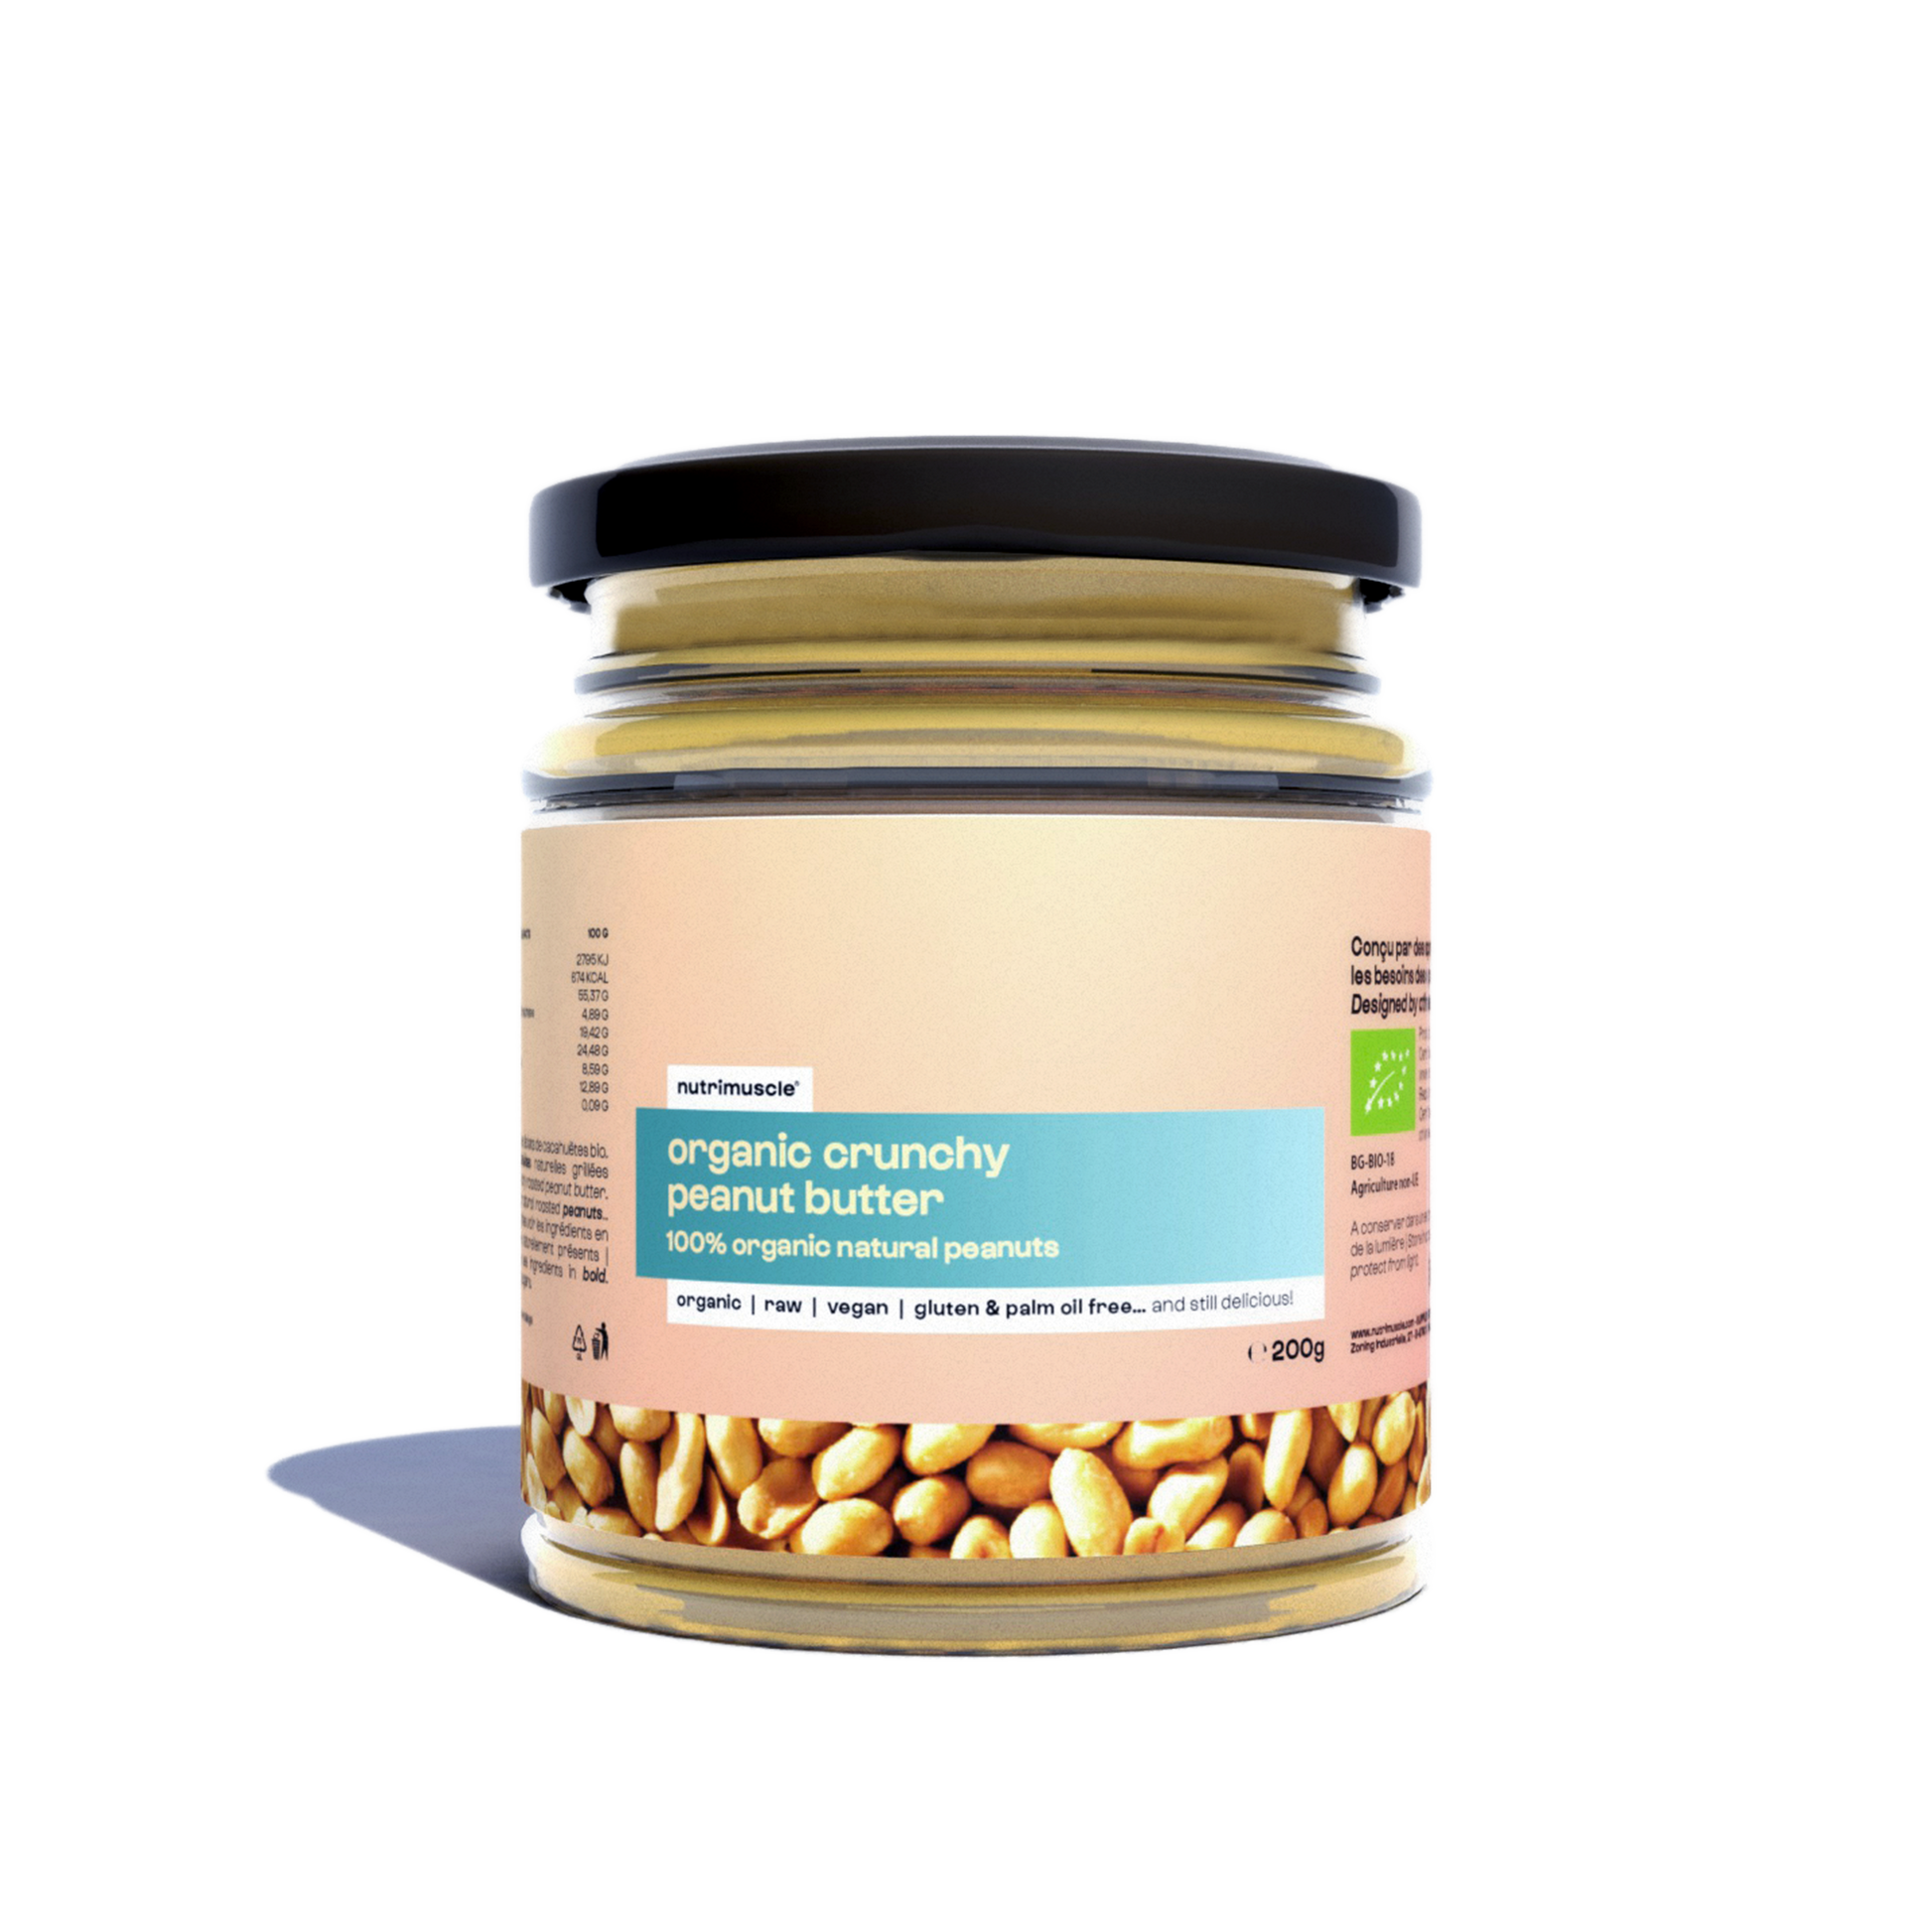 Complete organic peanut butter